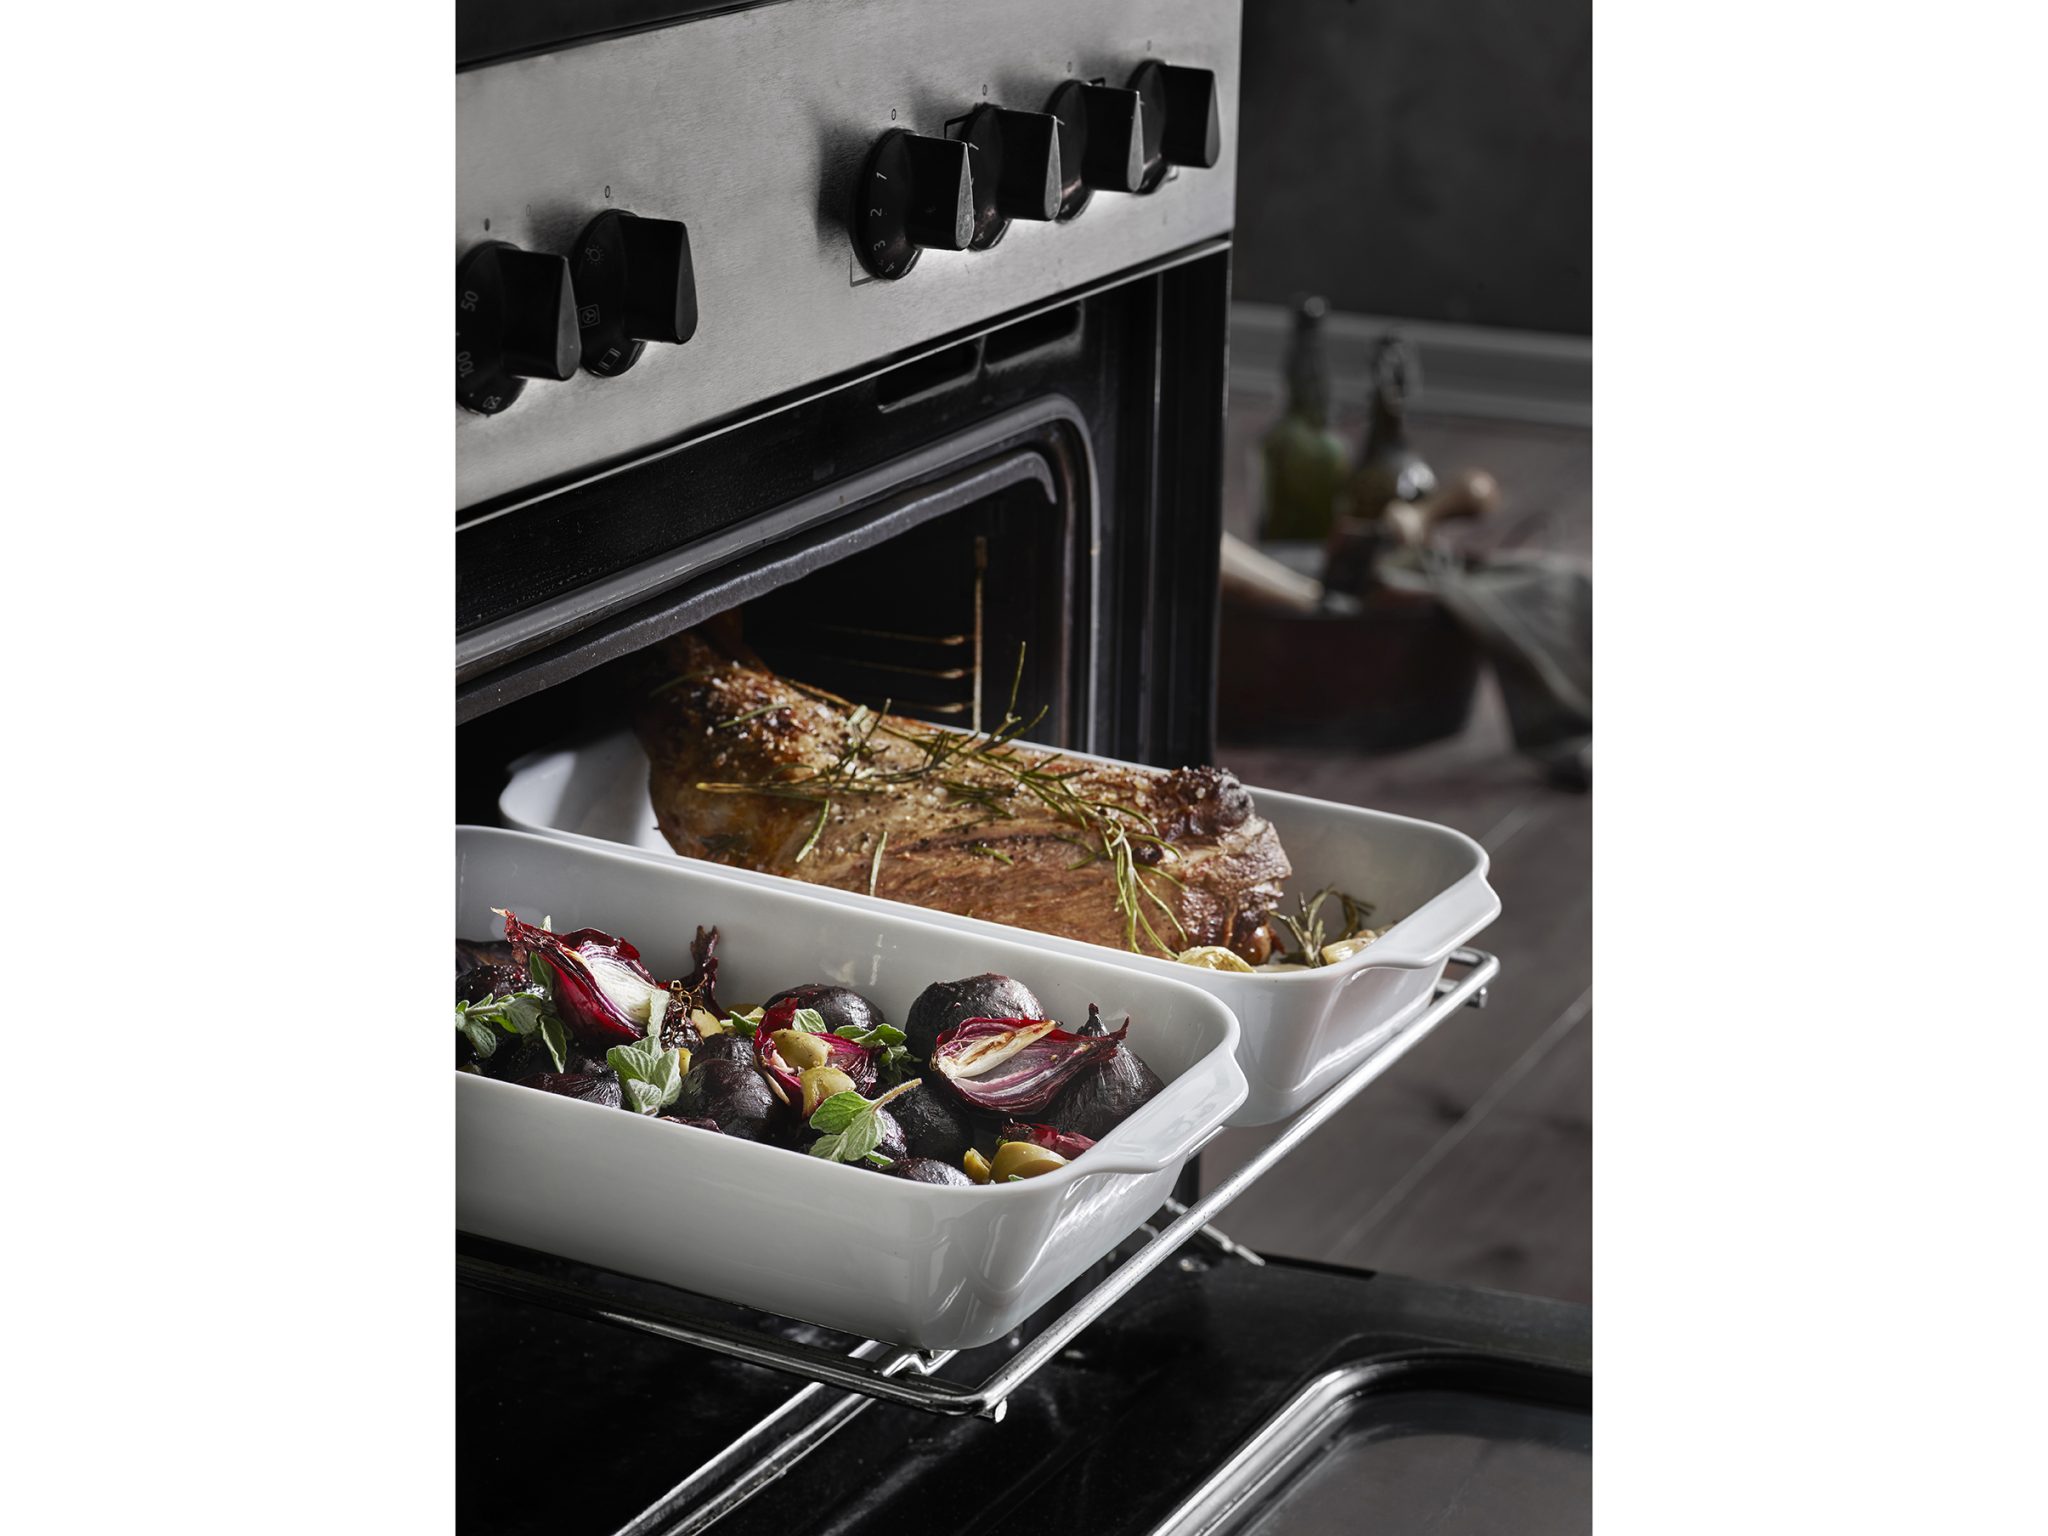 Pillivuyt ovnfade 2 stk. I elegant design. Stegefadene er perfekte til ovn, grill og servering. Går fra fryser til ovn til bord. Måler: 32 x 17 x 6 cm